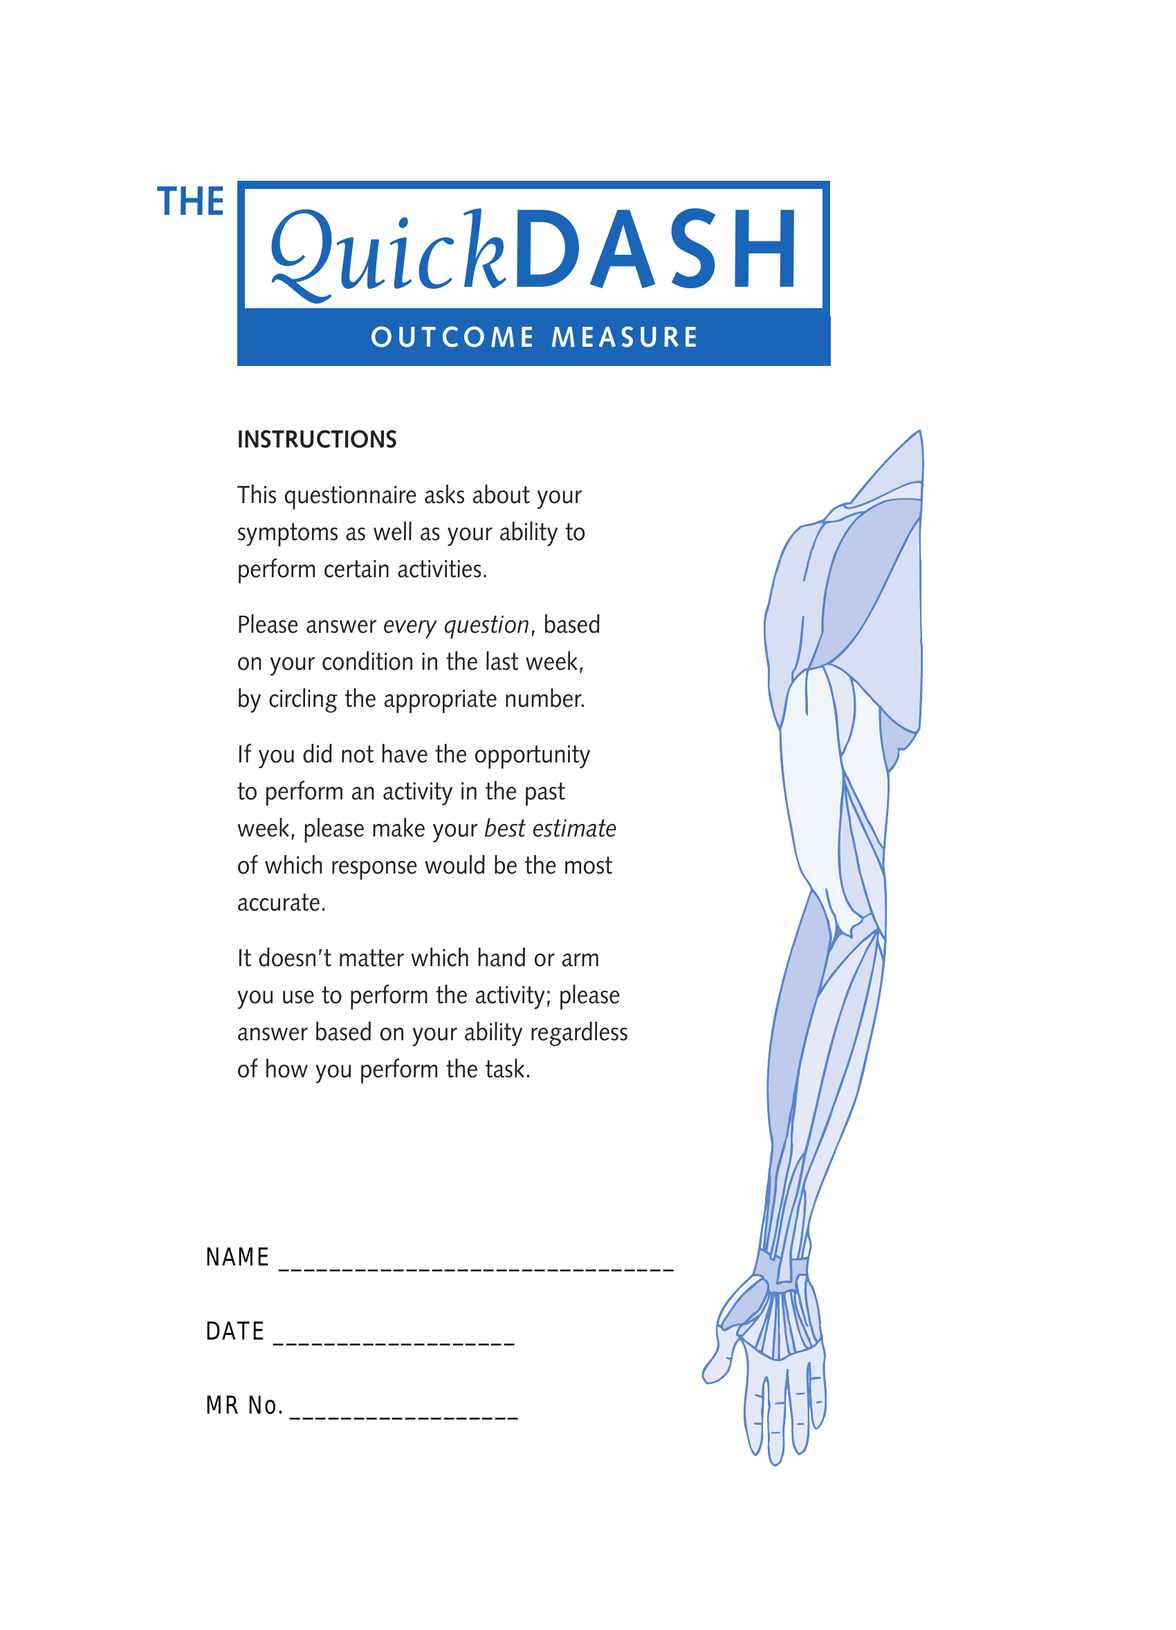 QuickDASH Outcome Measure PDF Example